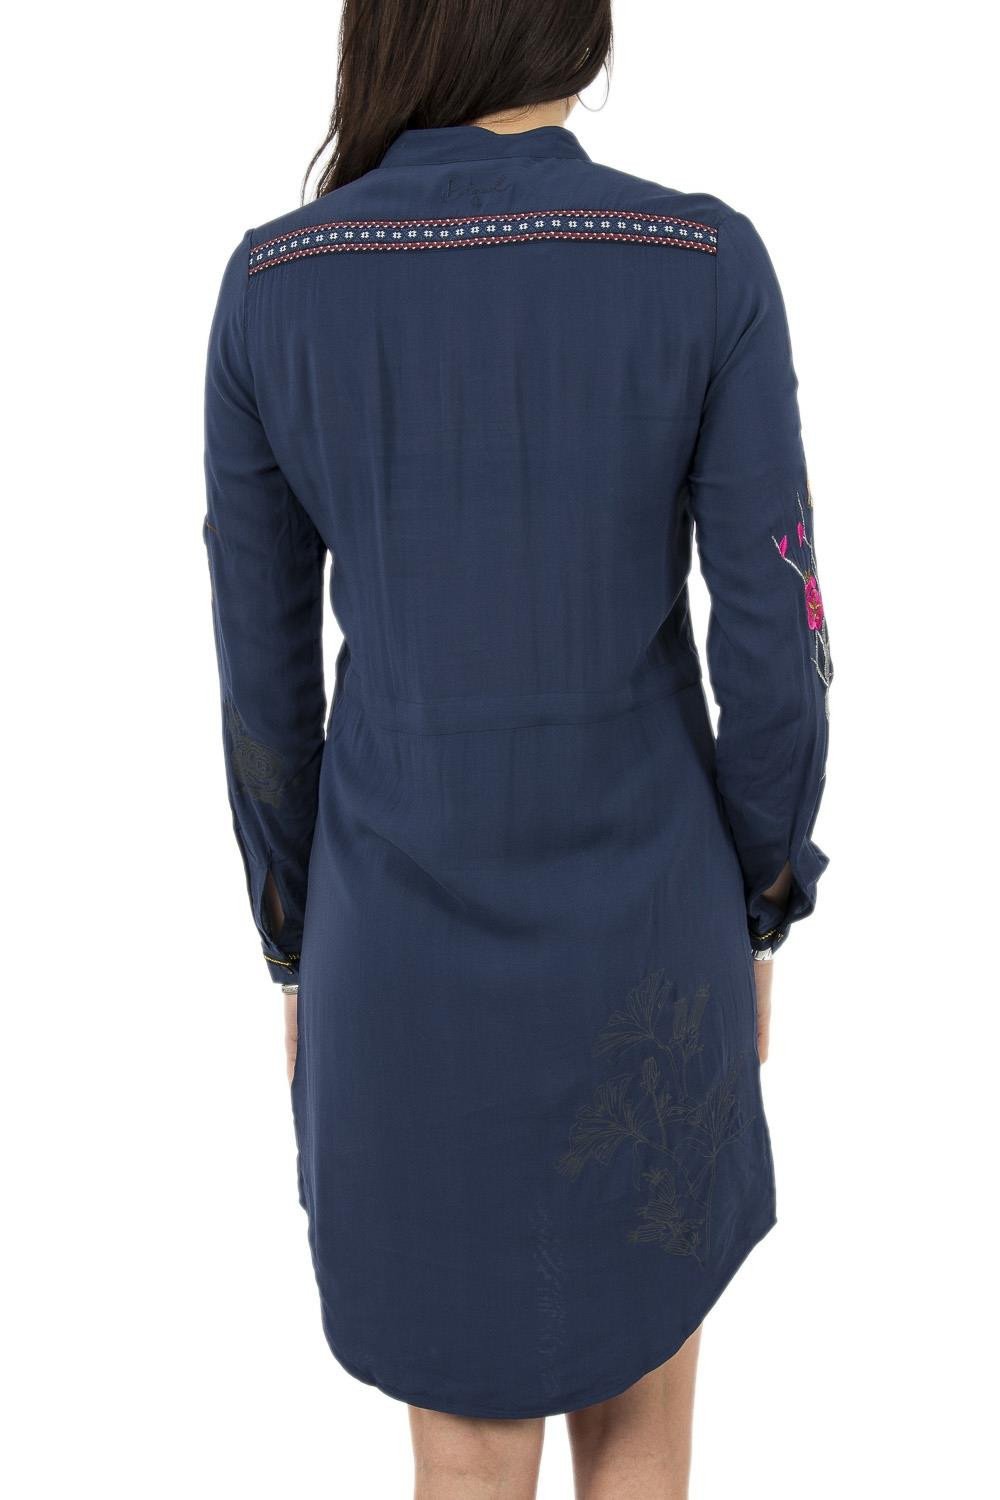 Desigual Women's Jazmin Long Sleeve Dress